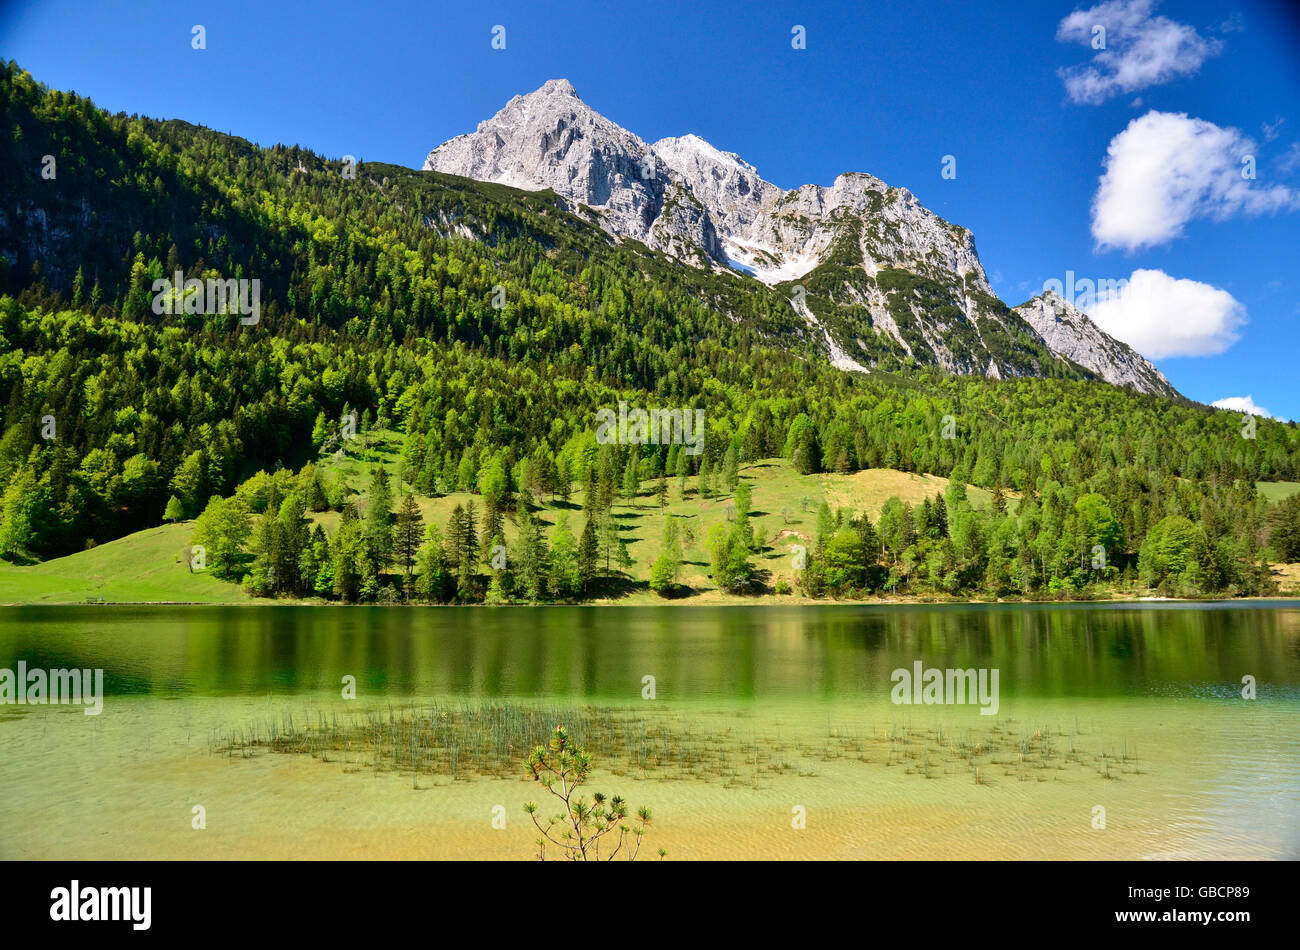 Wettersteinspitzen Ferchensee, le lac, les montagnes de Wetterstein, Karwendel, vallée de l'Isar, Mittenwald, Upper Bavaria, Bavaria, Germany Banque D'Images